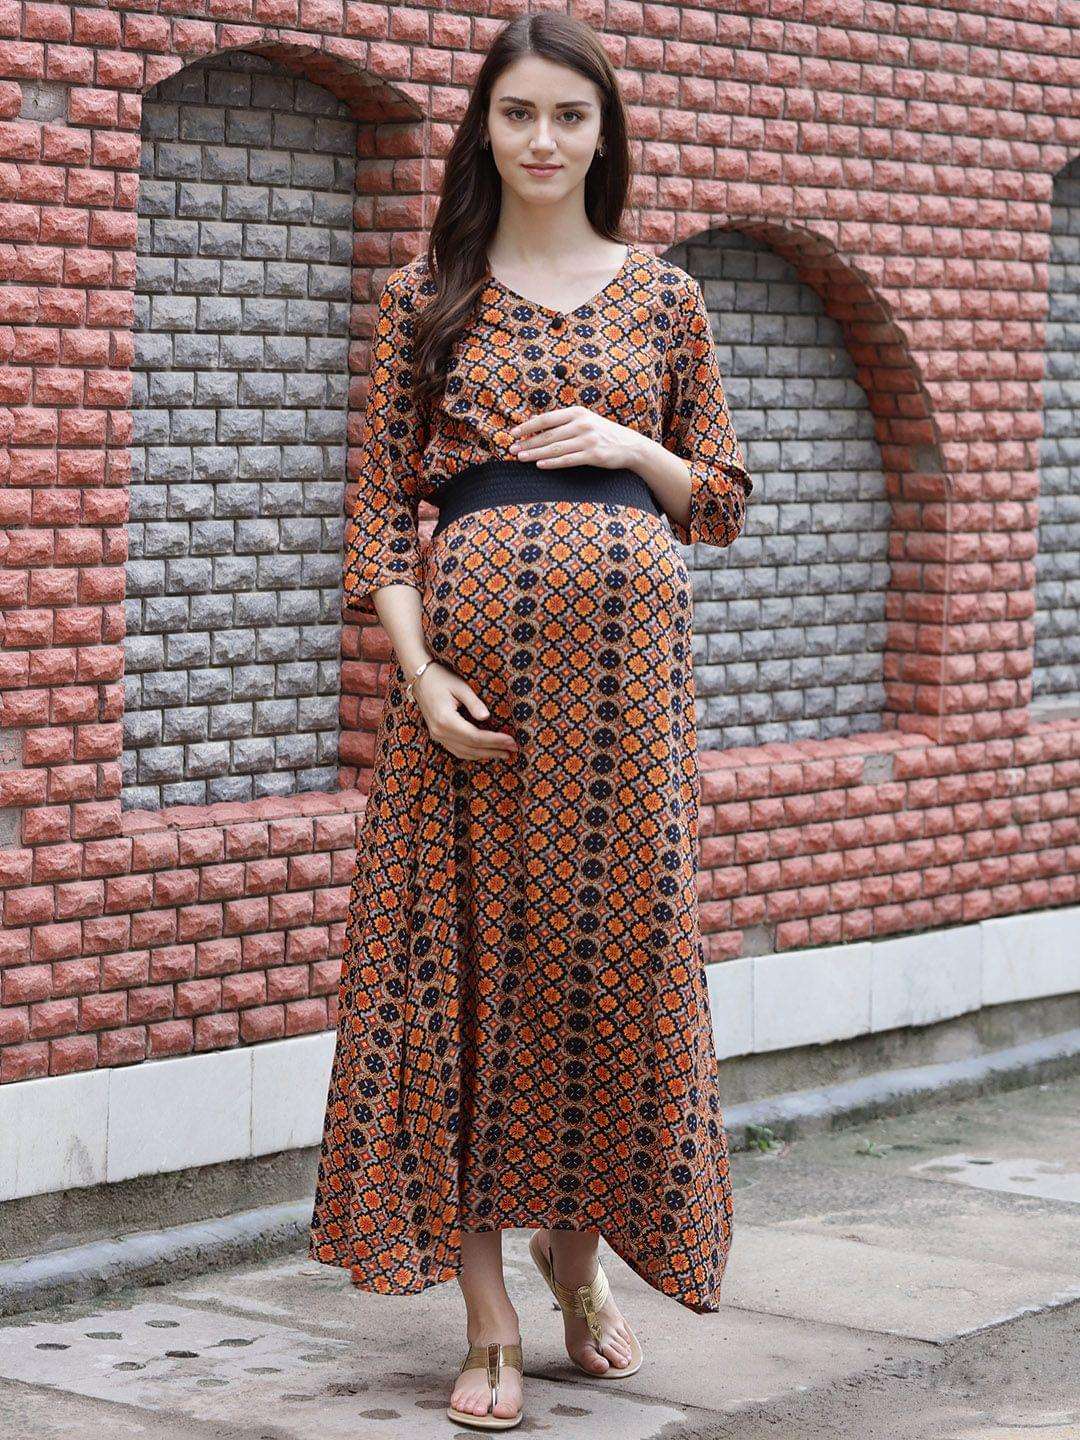 Putchi - India's No1 Maternity and Baby Marketplace | Nursing Wear